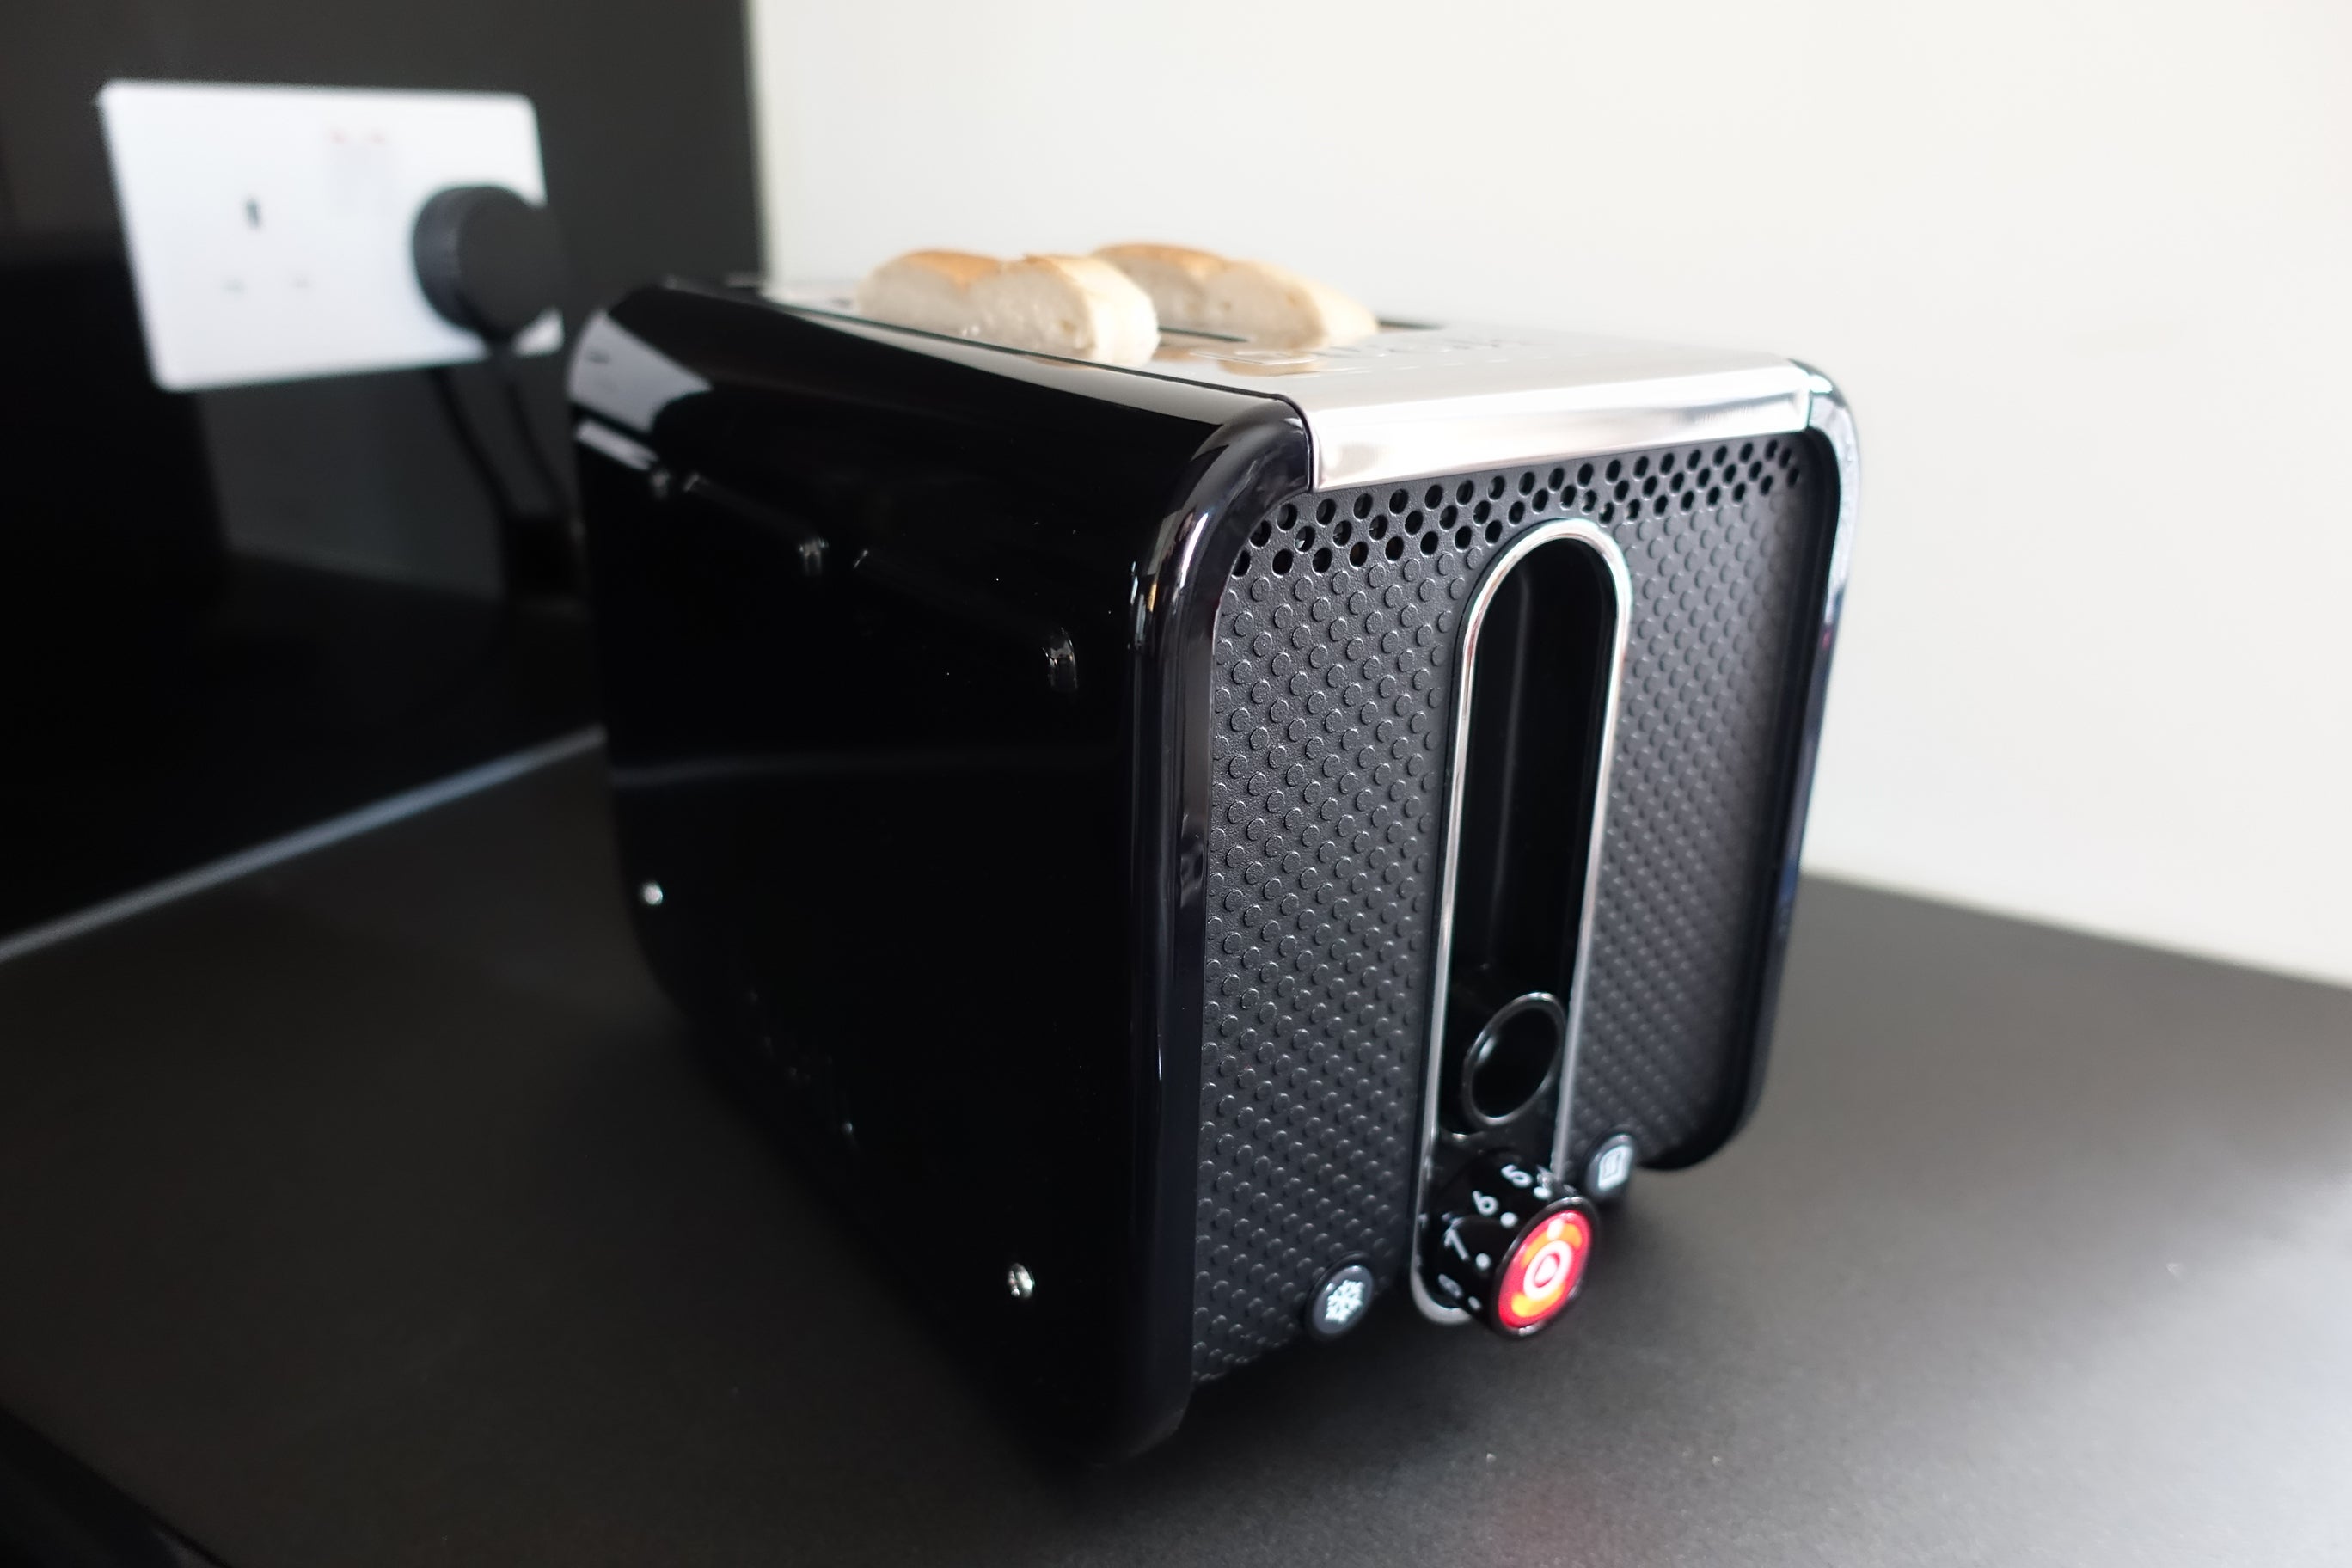 Dualit Studio 2-Slice toaster